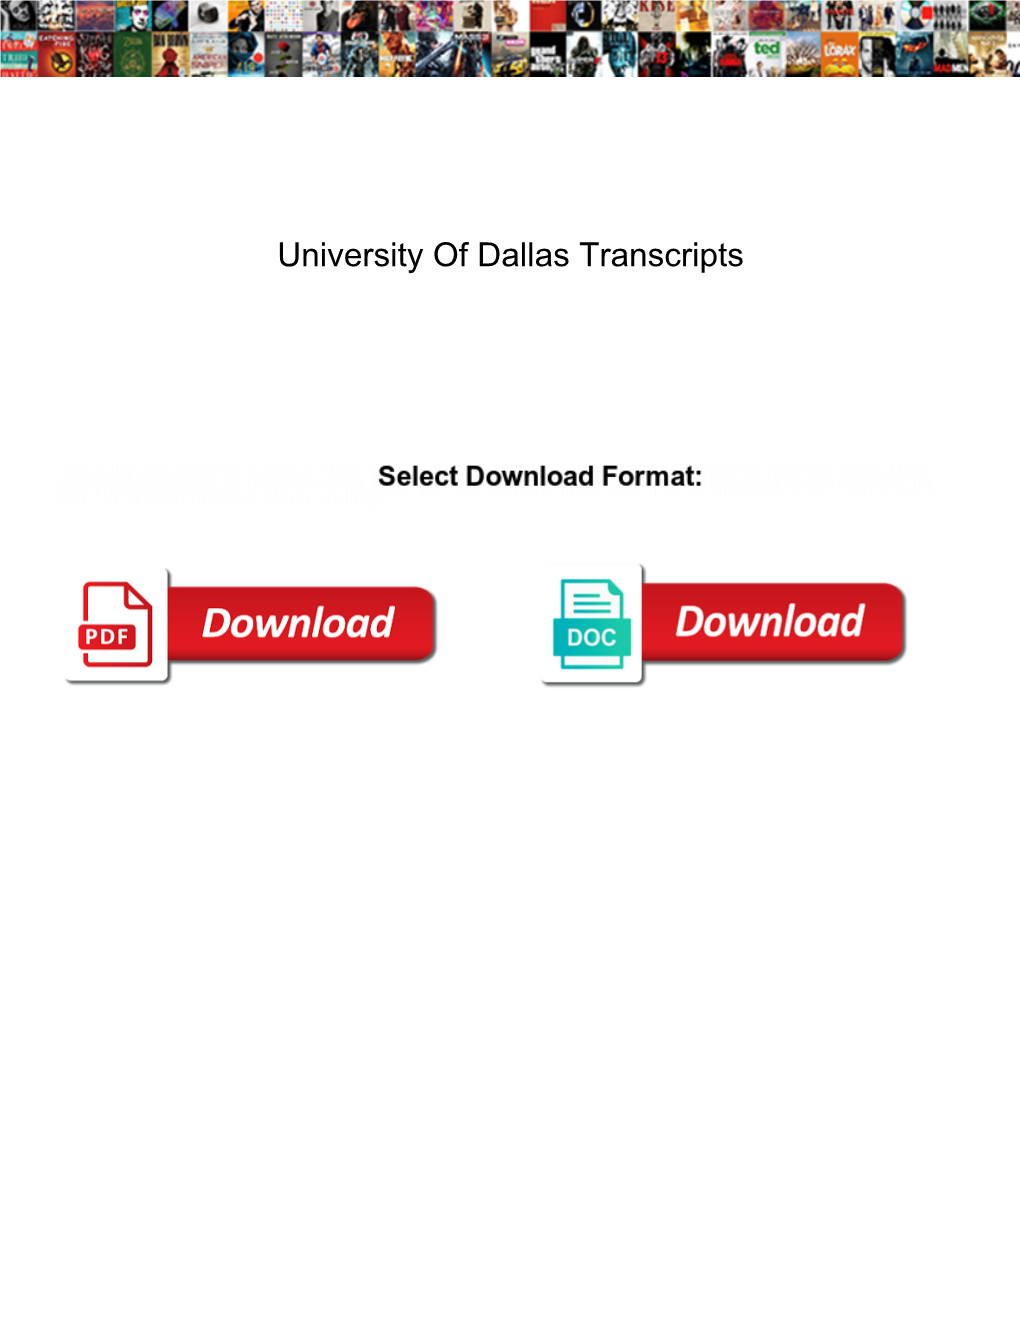 University of Dallas Transcripts